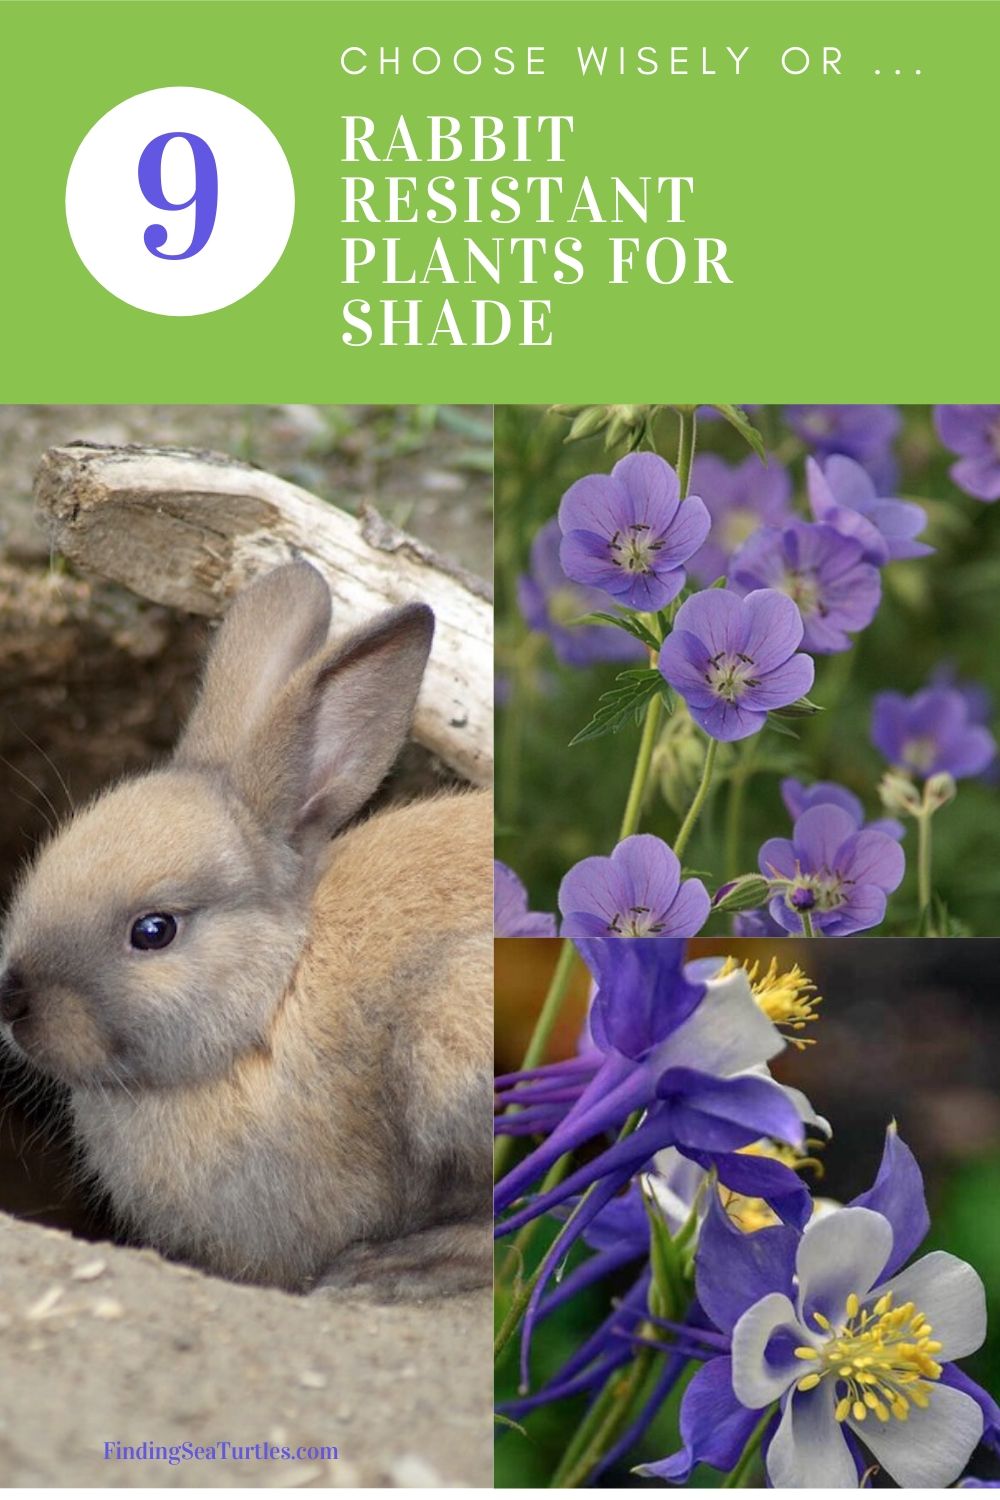 Choose Wisely or ... Rabbit Resistant Plants for Shade #PollinatorPlants #RabbitResistant #PlantsResistanttoRabbits #PlantsforPollinators #Gardening #Perennials